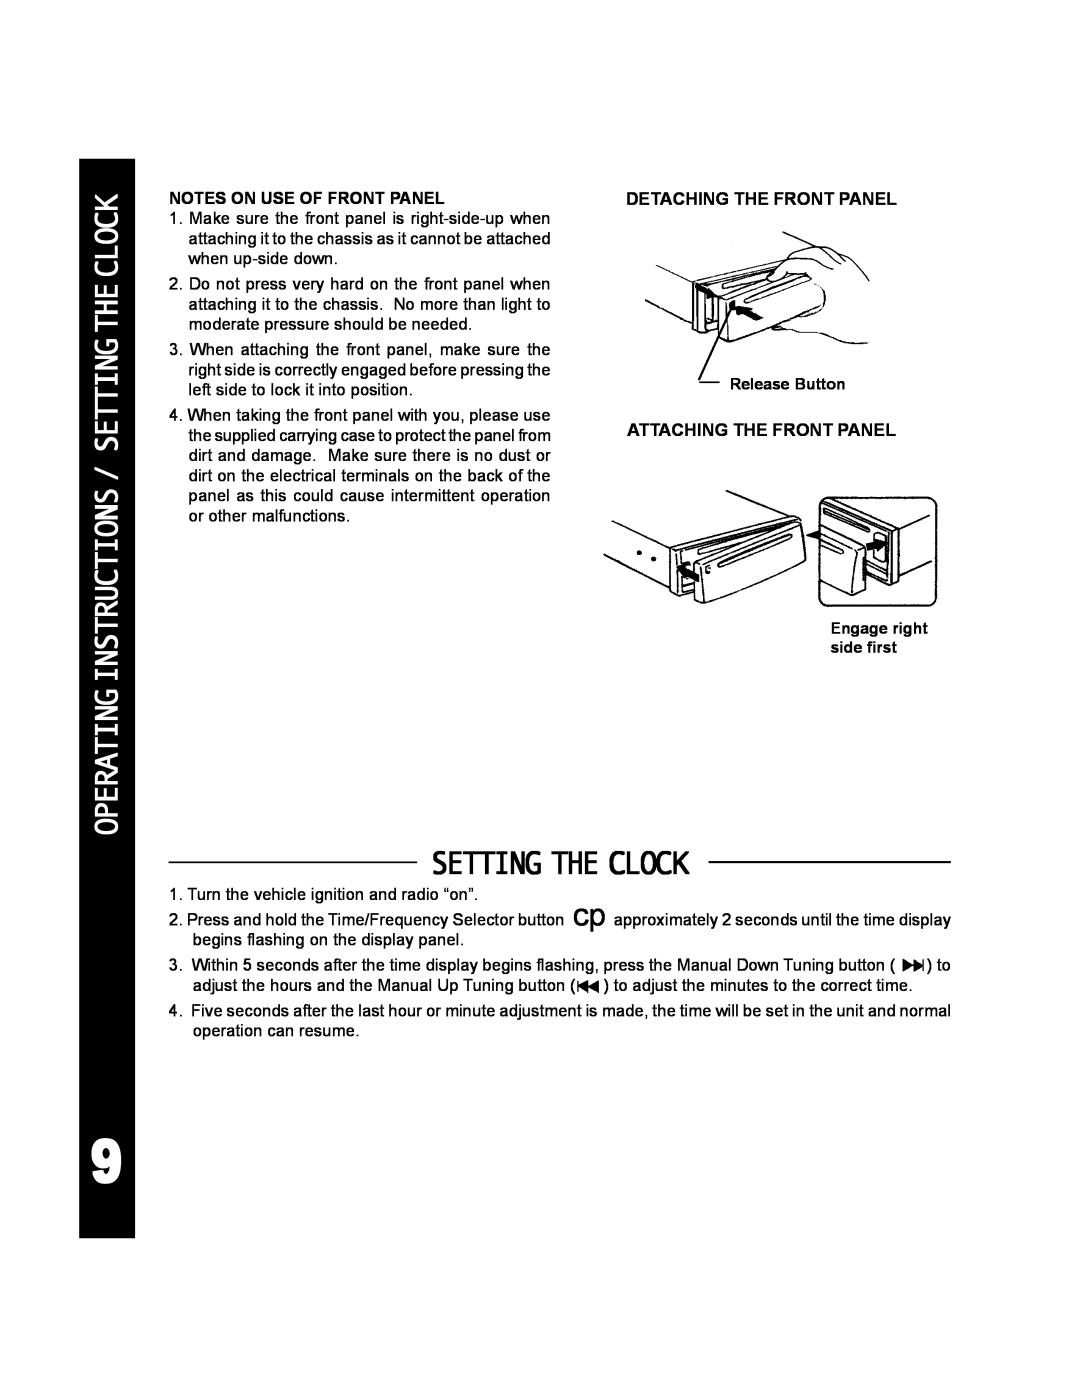 Audiovox ACD-25 manual Operatinginstructions/ Settingtheclock, Setting The Clock 